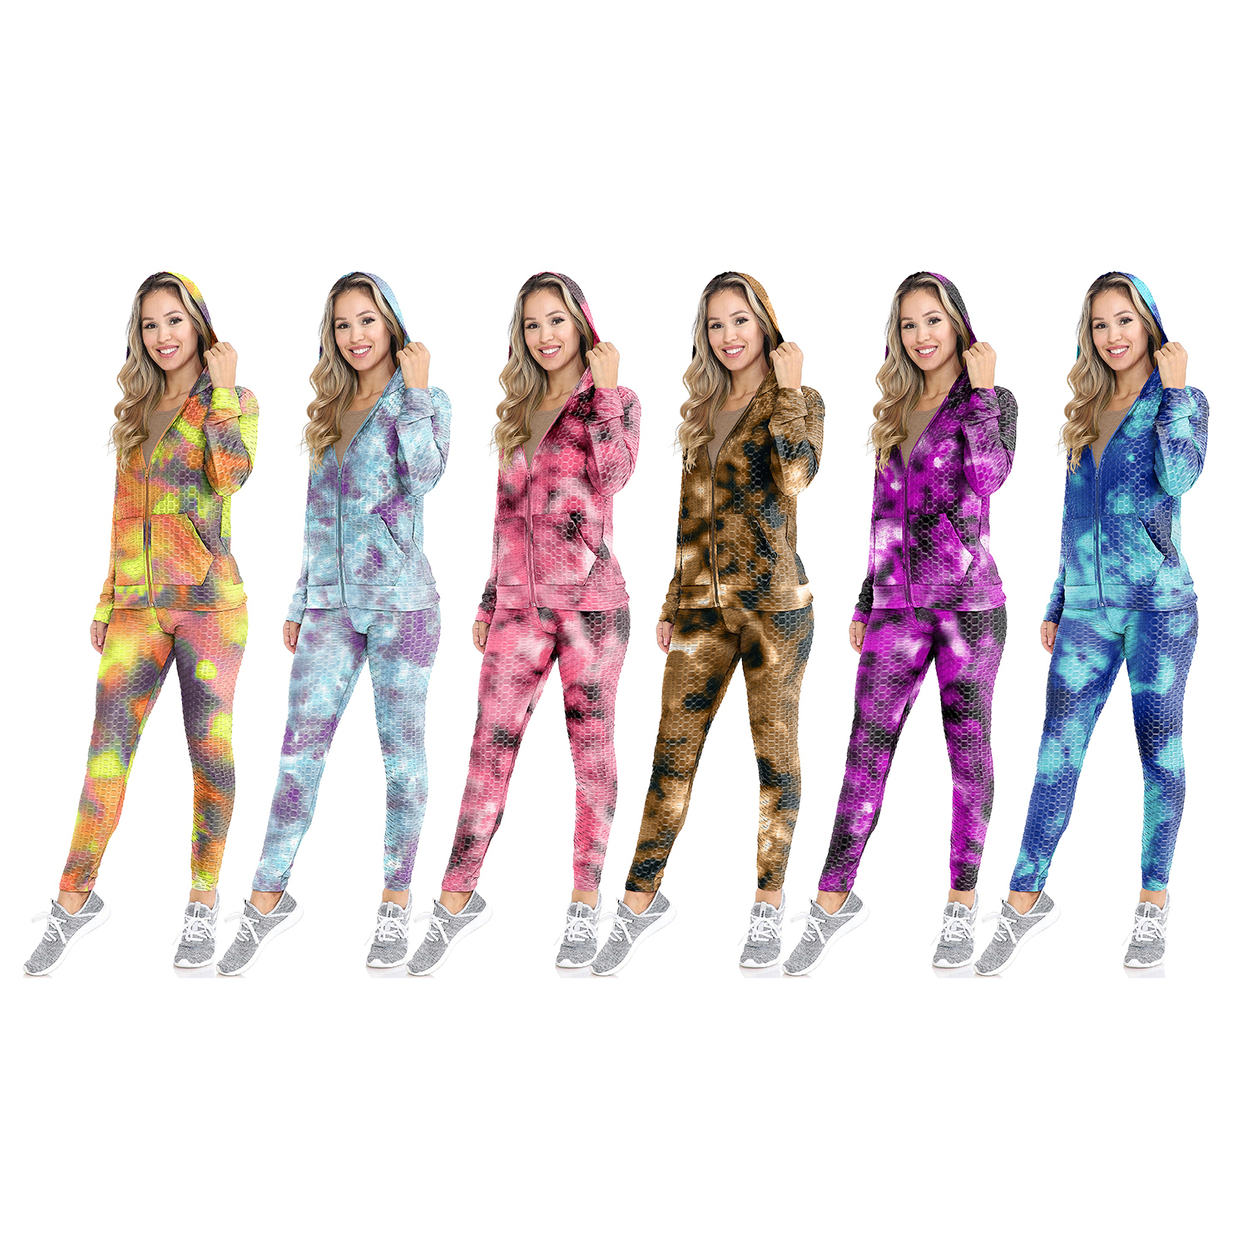 2-Piece: Women's Athletic Anti-Cellulite Textured Tie Dye Body Contour Yoga Track Suit W/ Hood - Medium, Solid